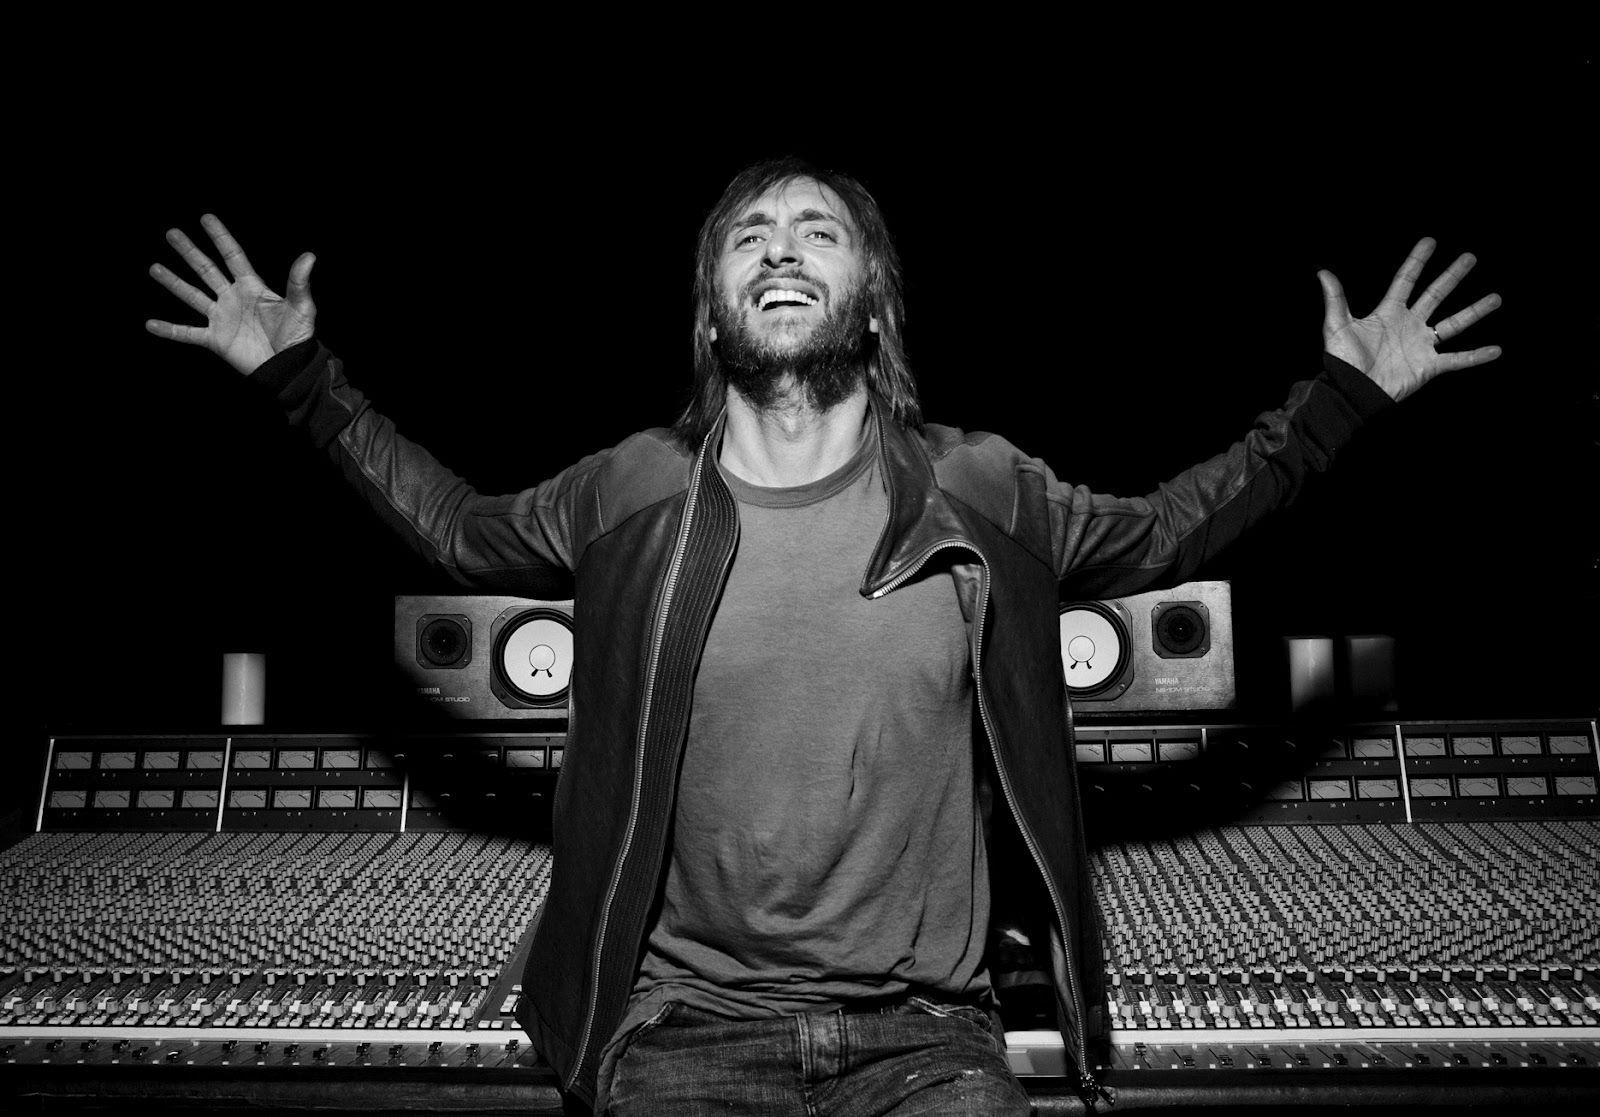 Best David Guetta Photographs Which is Rocking